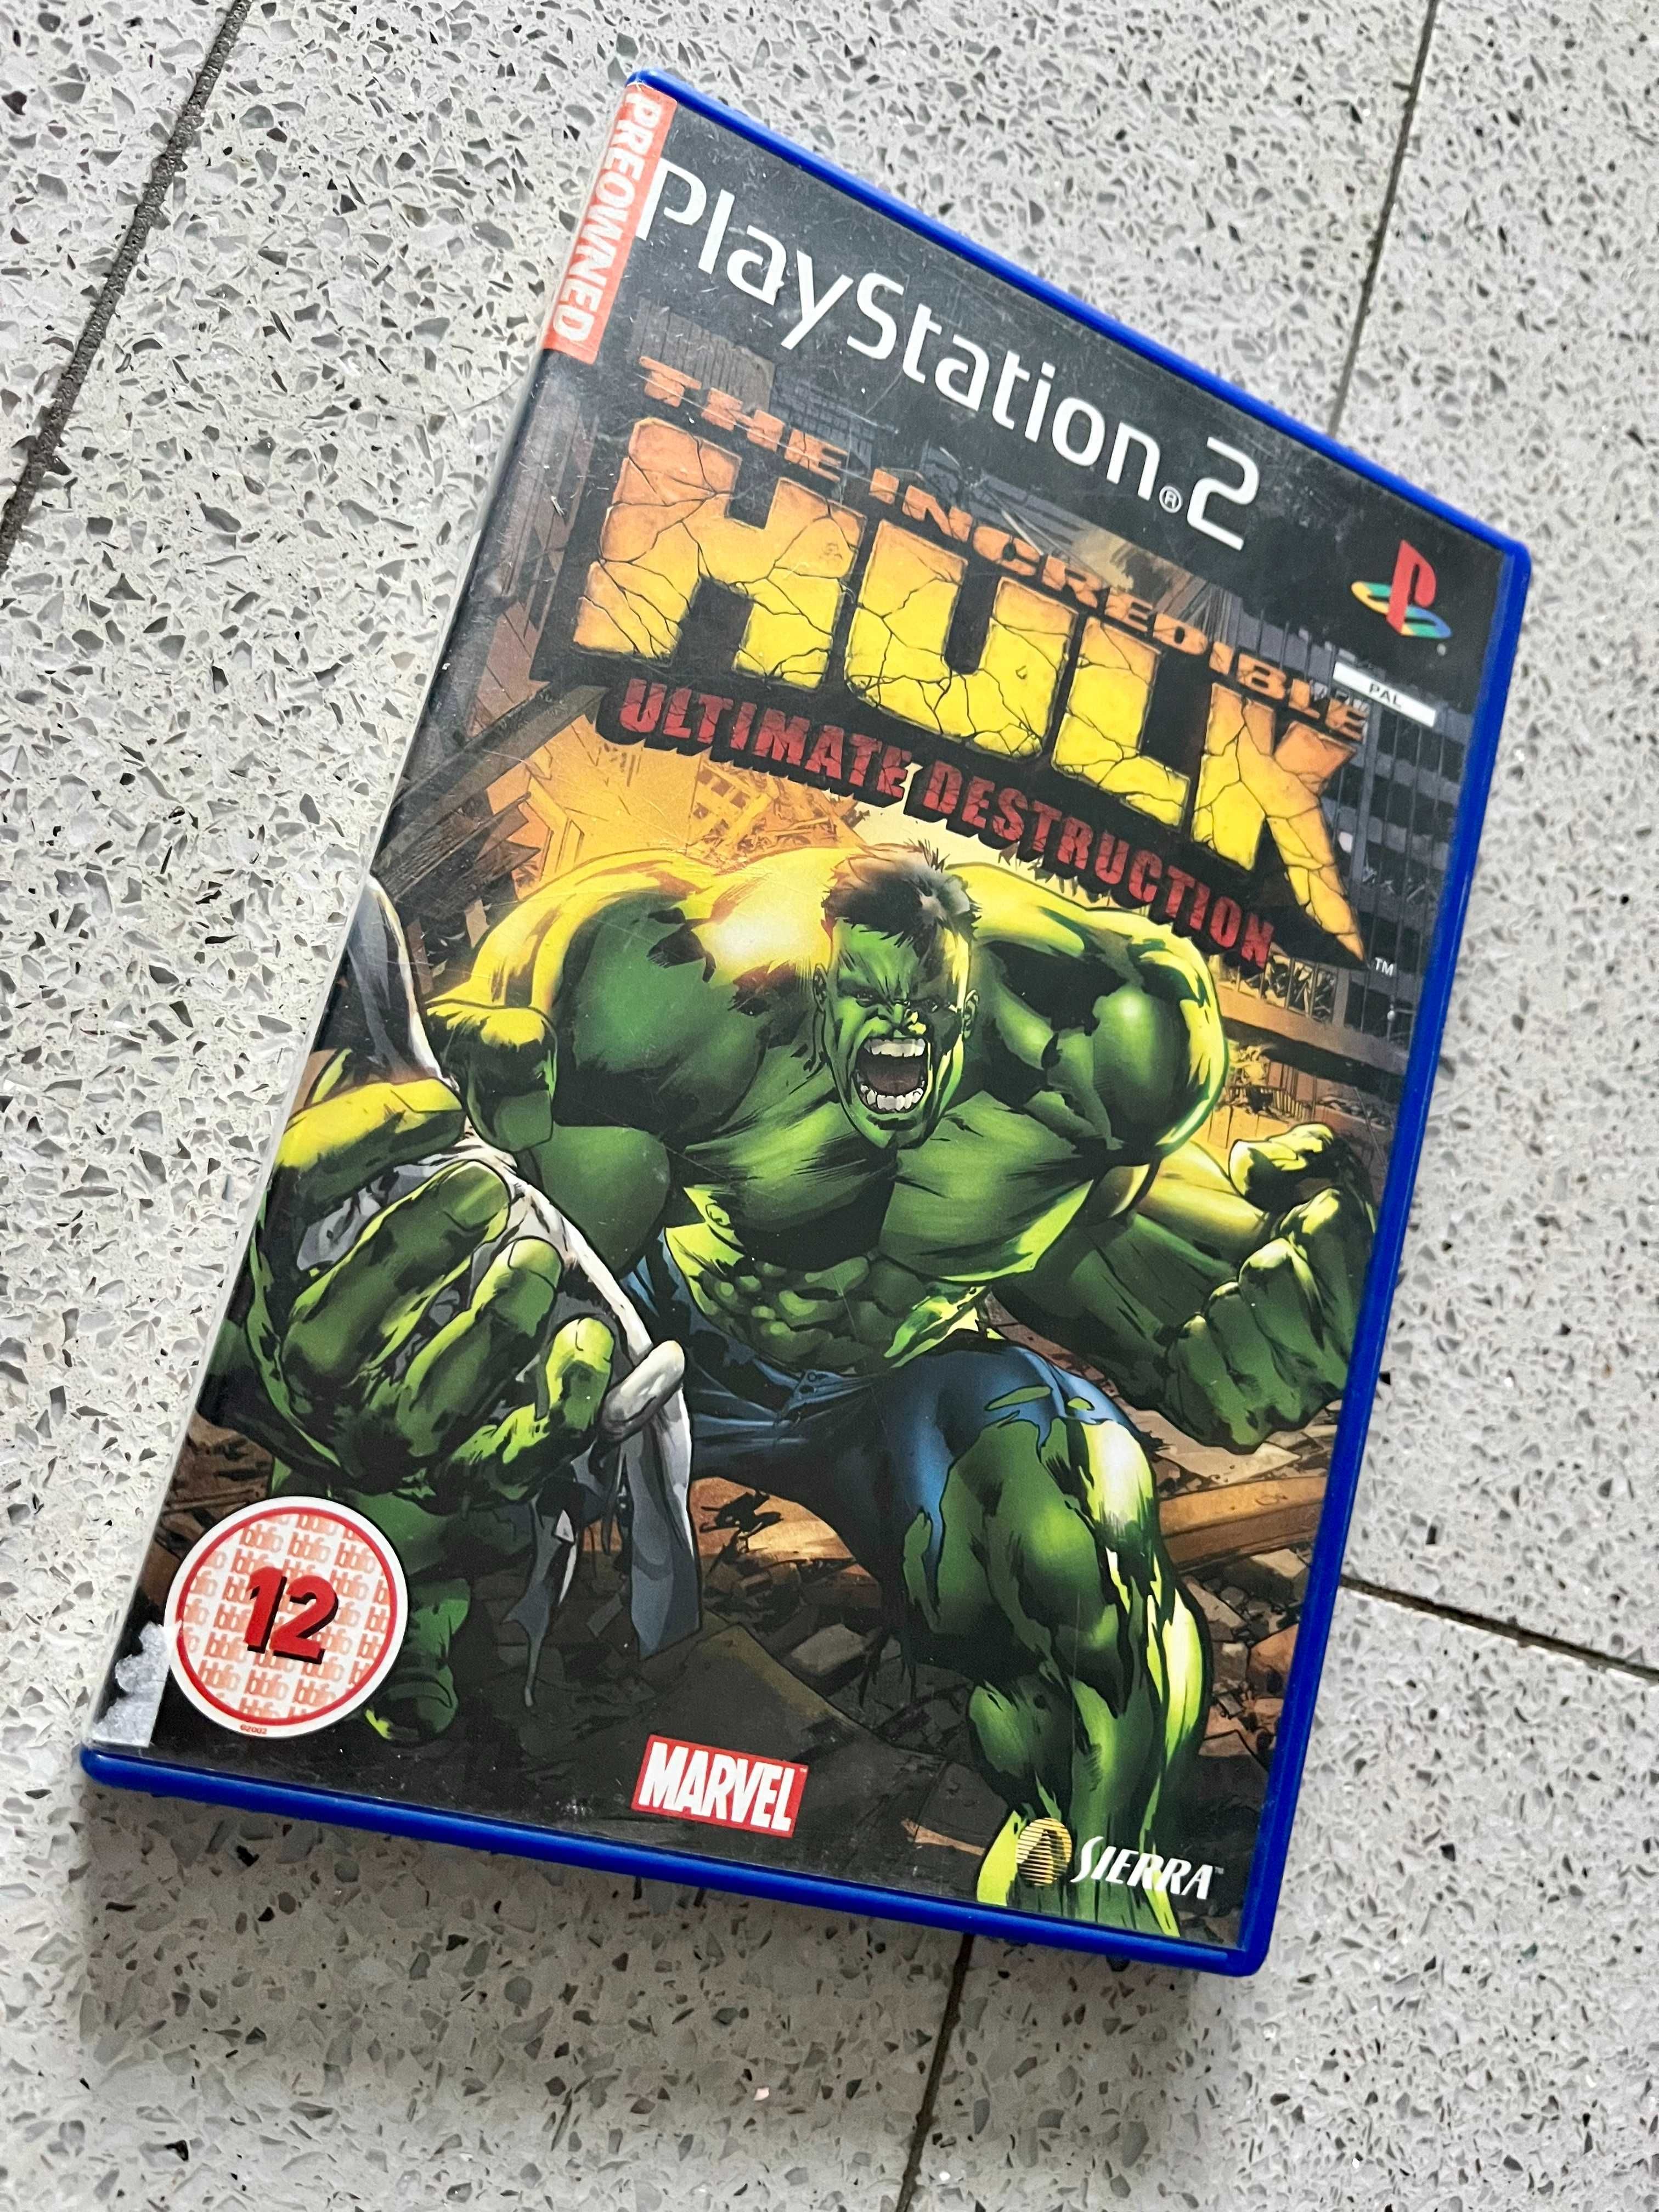 The Incredible Hulk : Ultimate Destruction ( PS2 Playstation 2 )